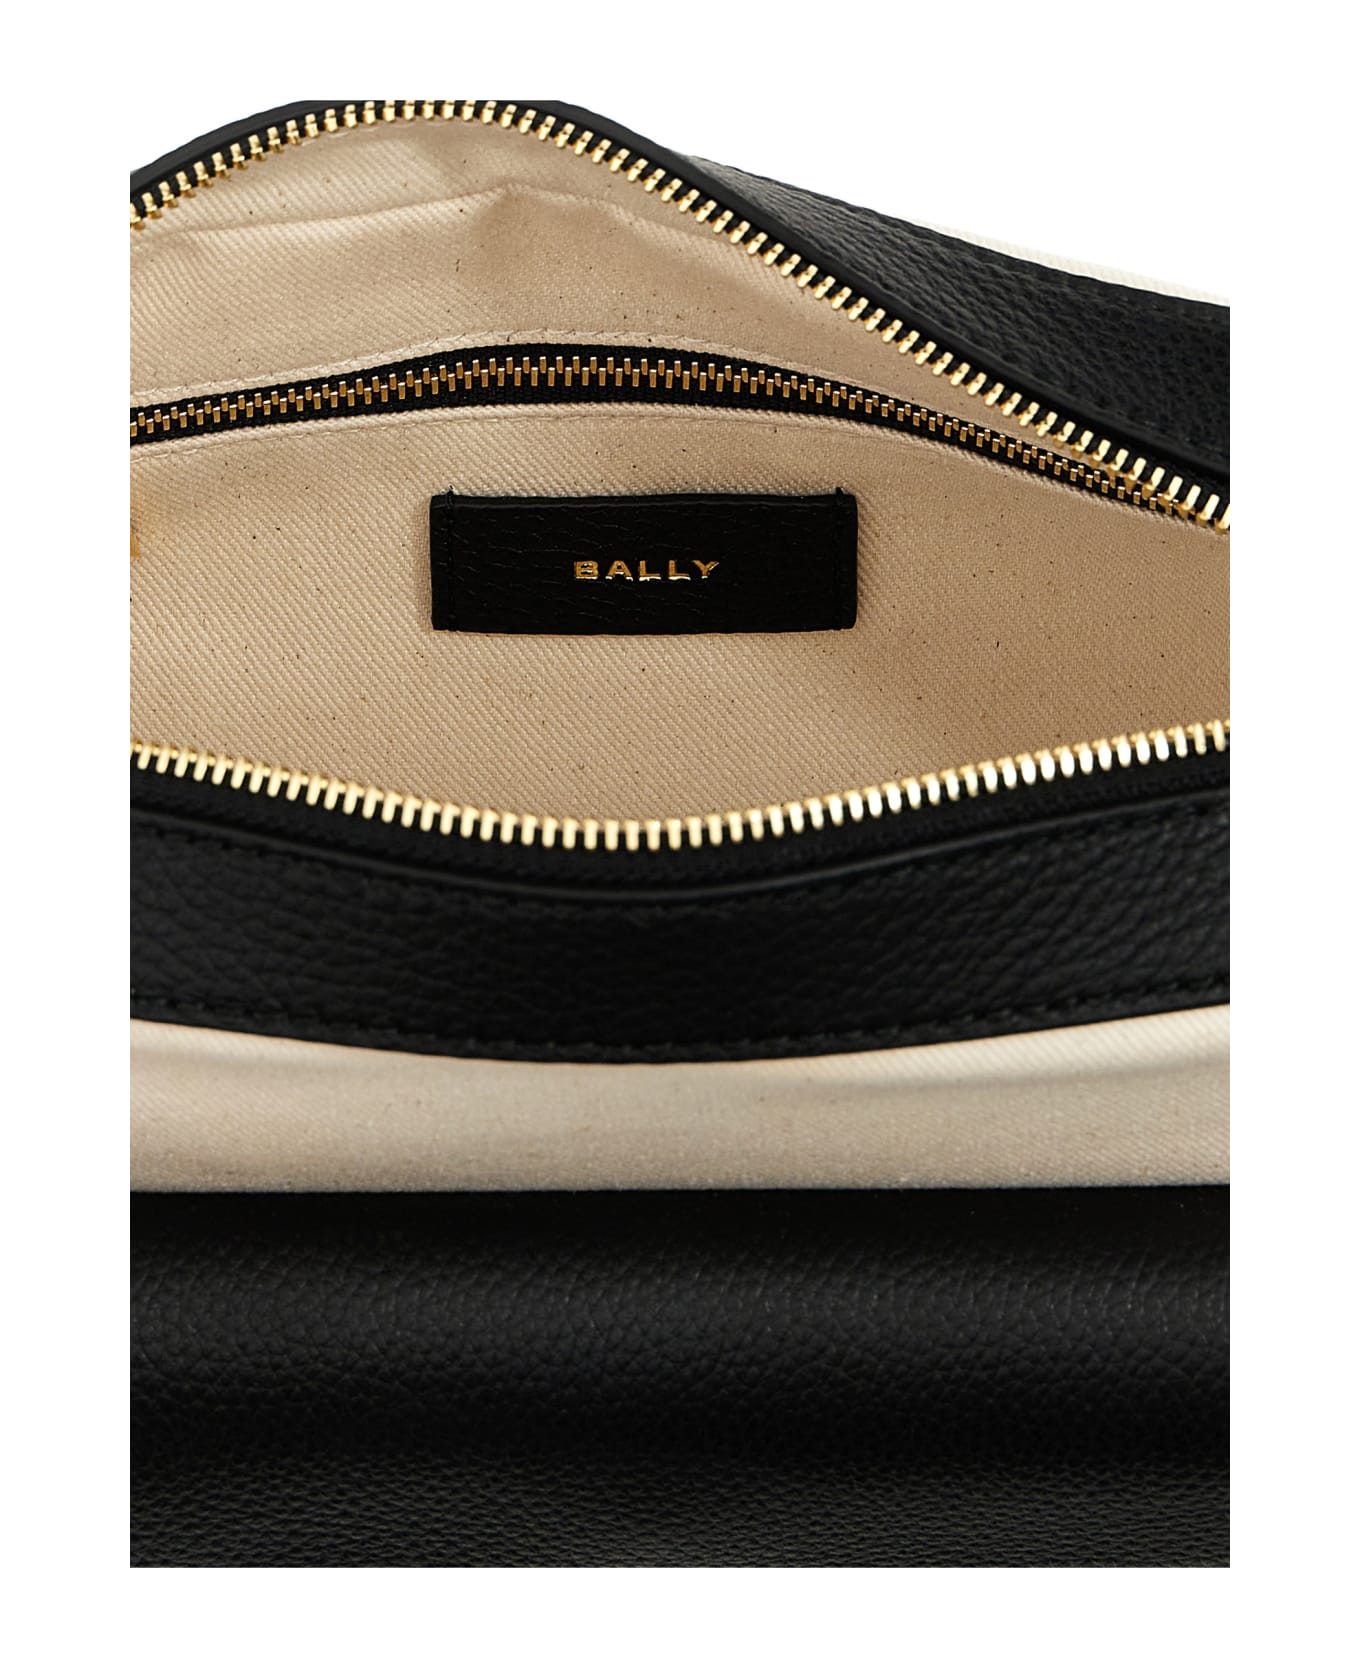 Bally 'bar Daniel' Crossbody Bag - White/Black ショルダーバッグ